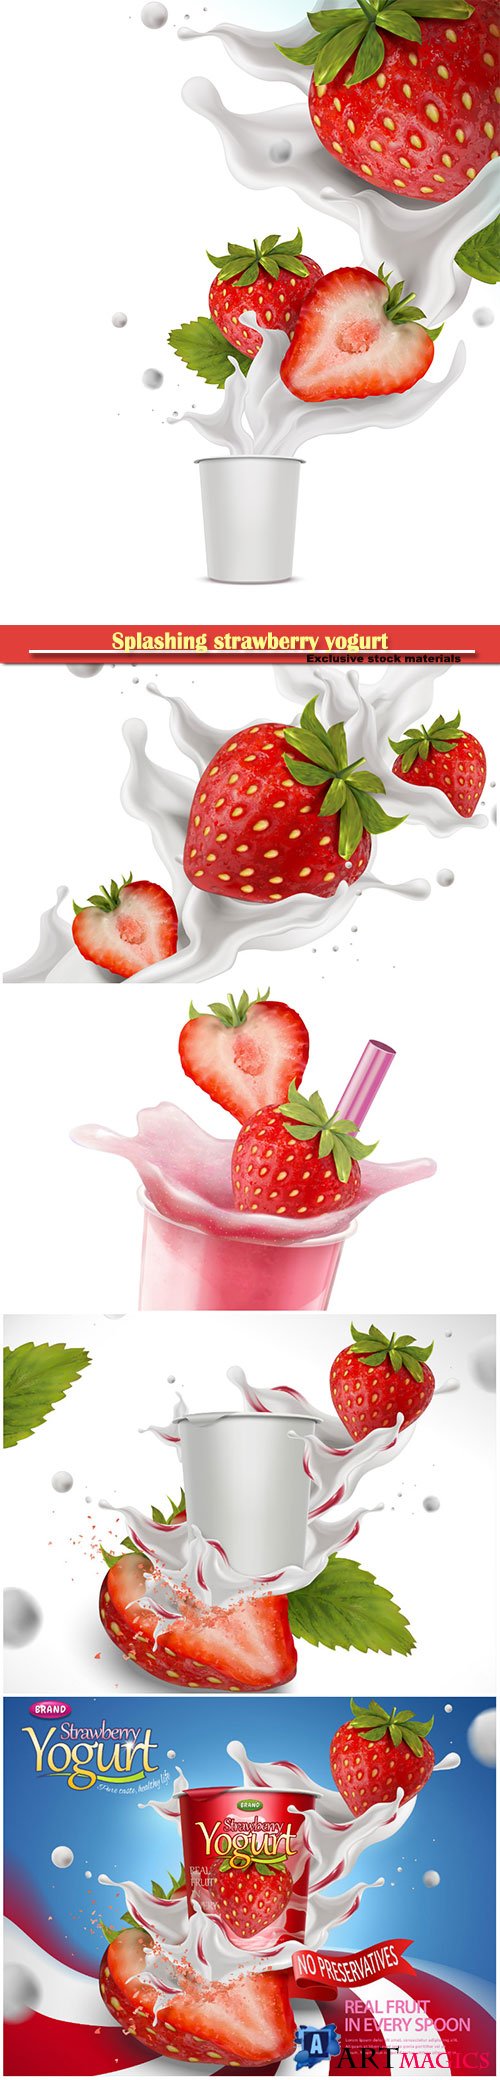 Splashing strawberry yogurt with fresh fruit in 3d illustration